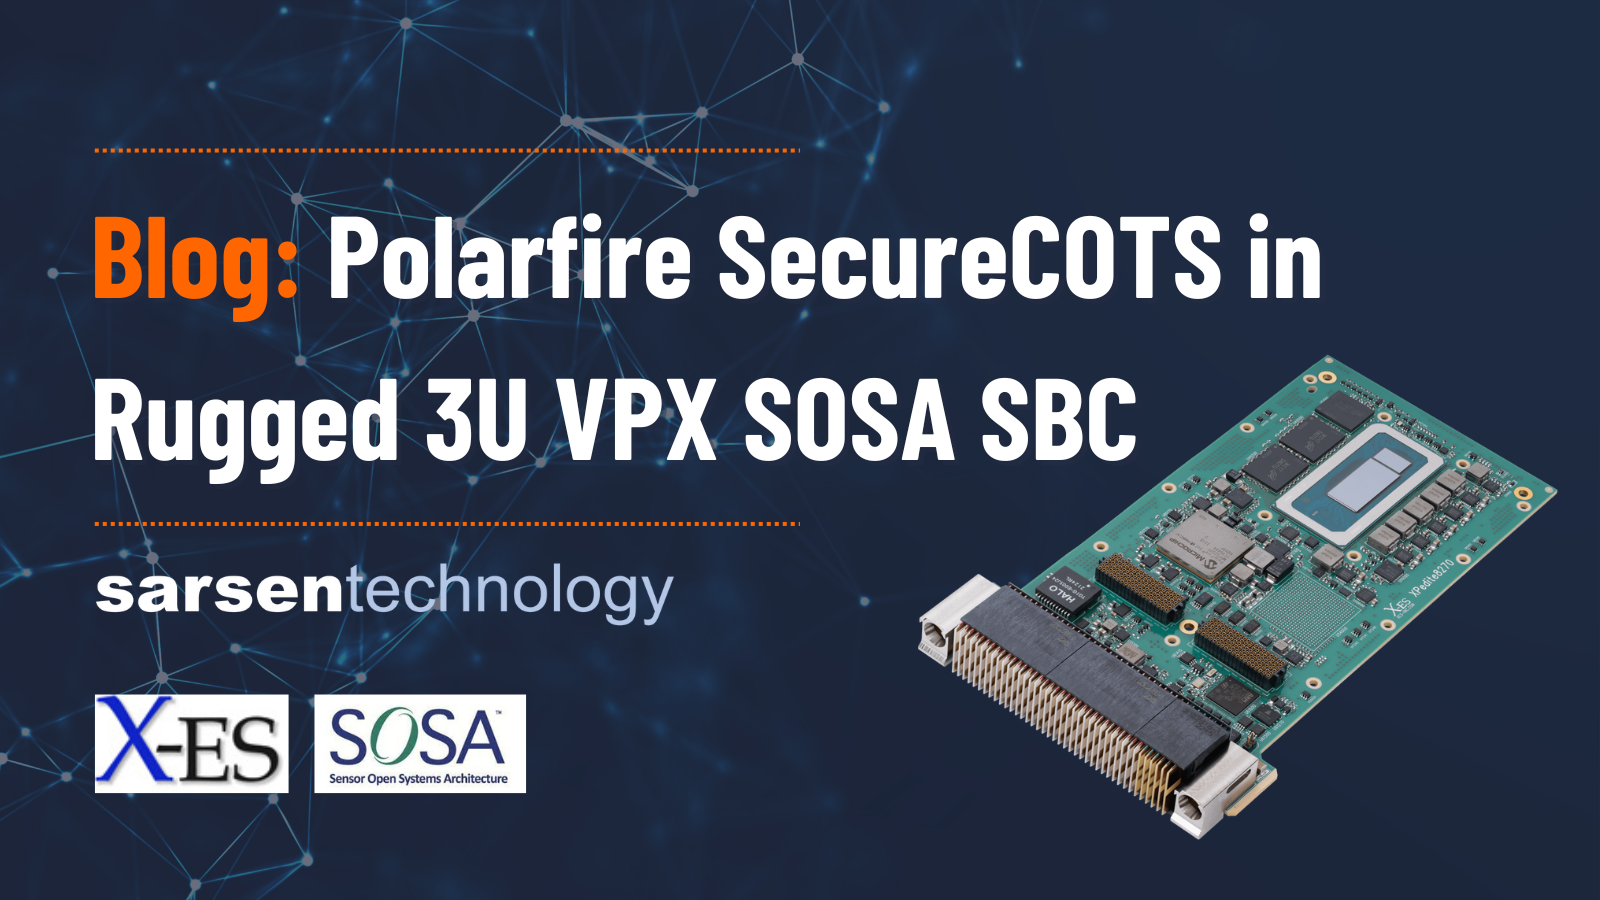 PolarFire SecureCOTS in 3U VPX SOSA SBC